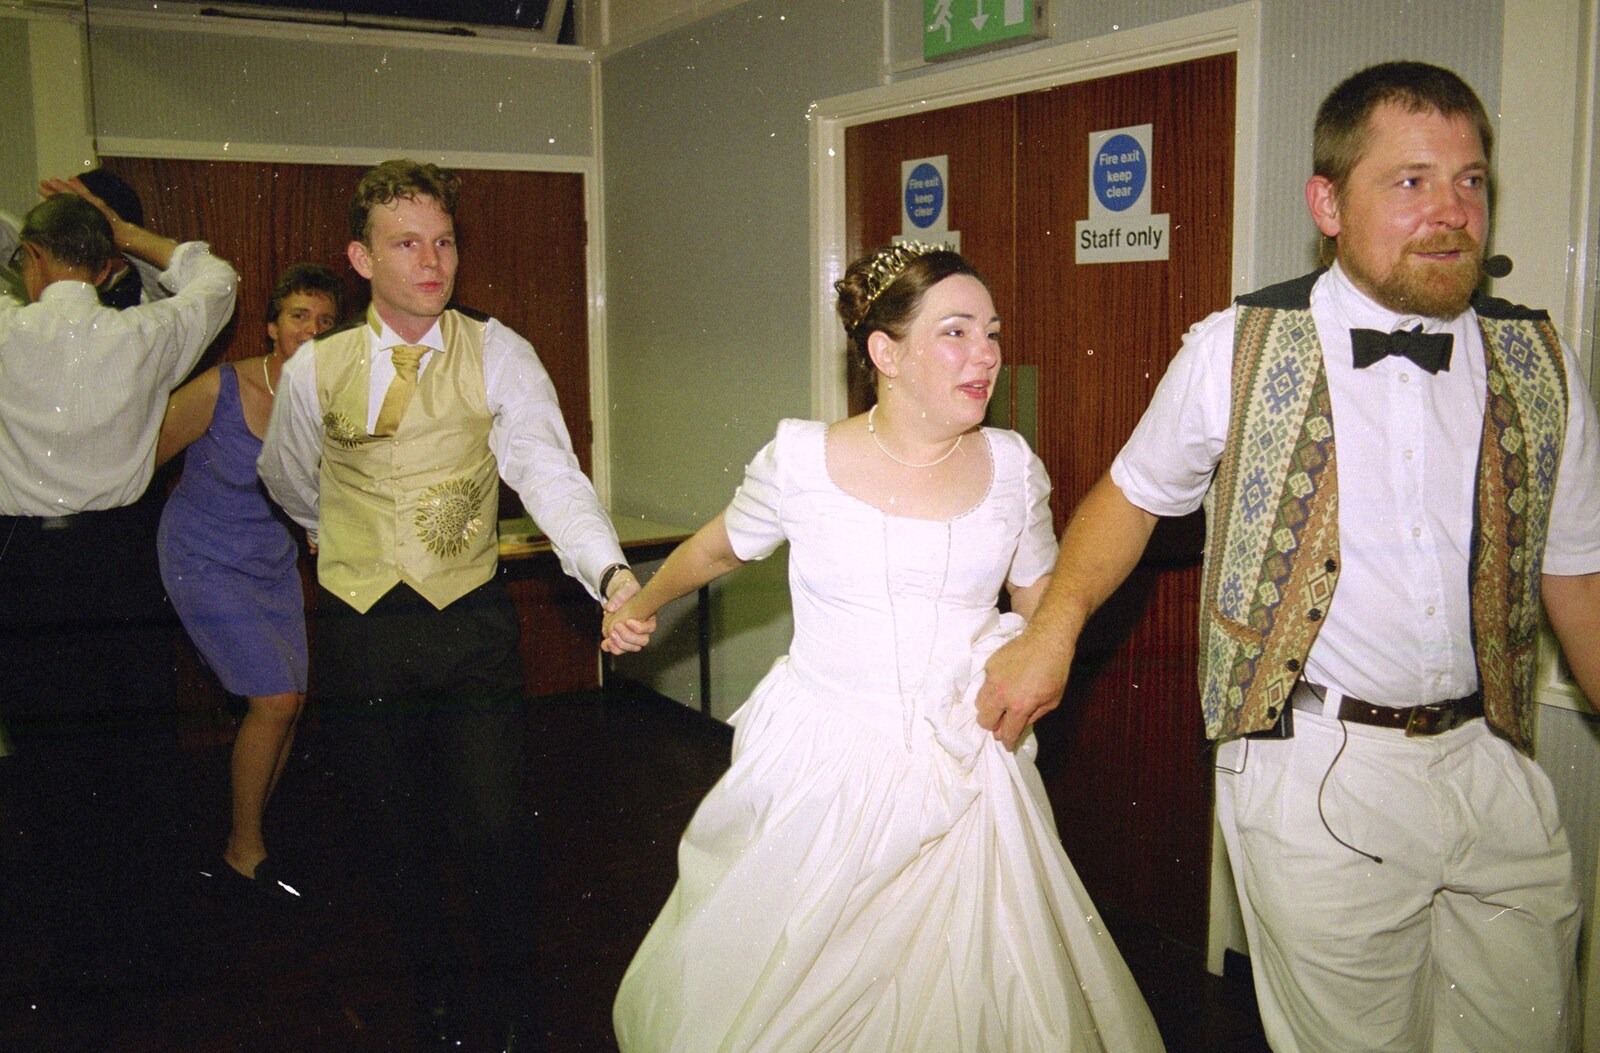 Leading a procession through the social club from Joe and Lesley's CISU Wedding, Ipswich, Suffolk - 30th July 1998